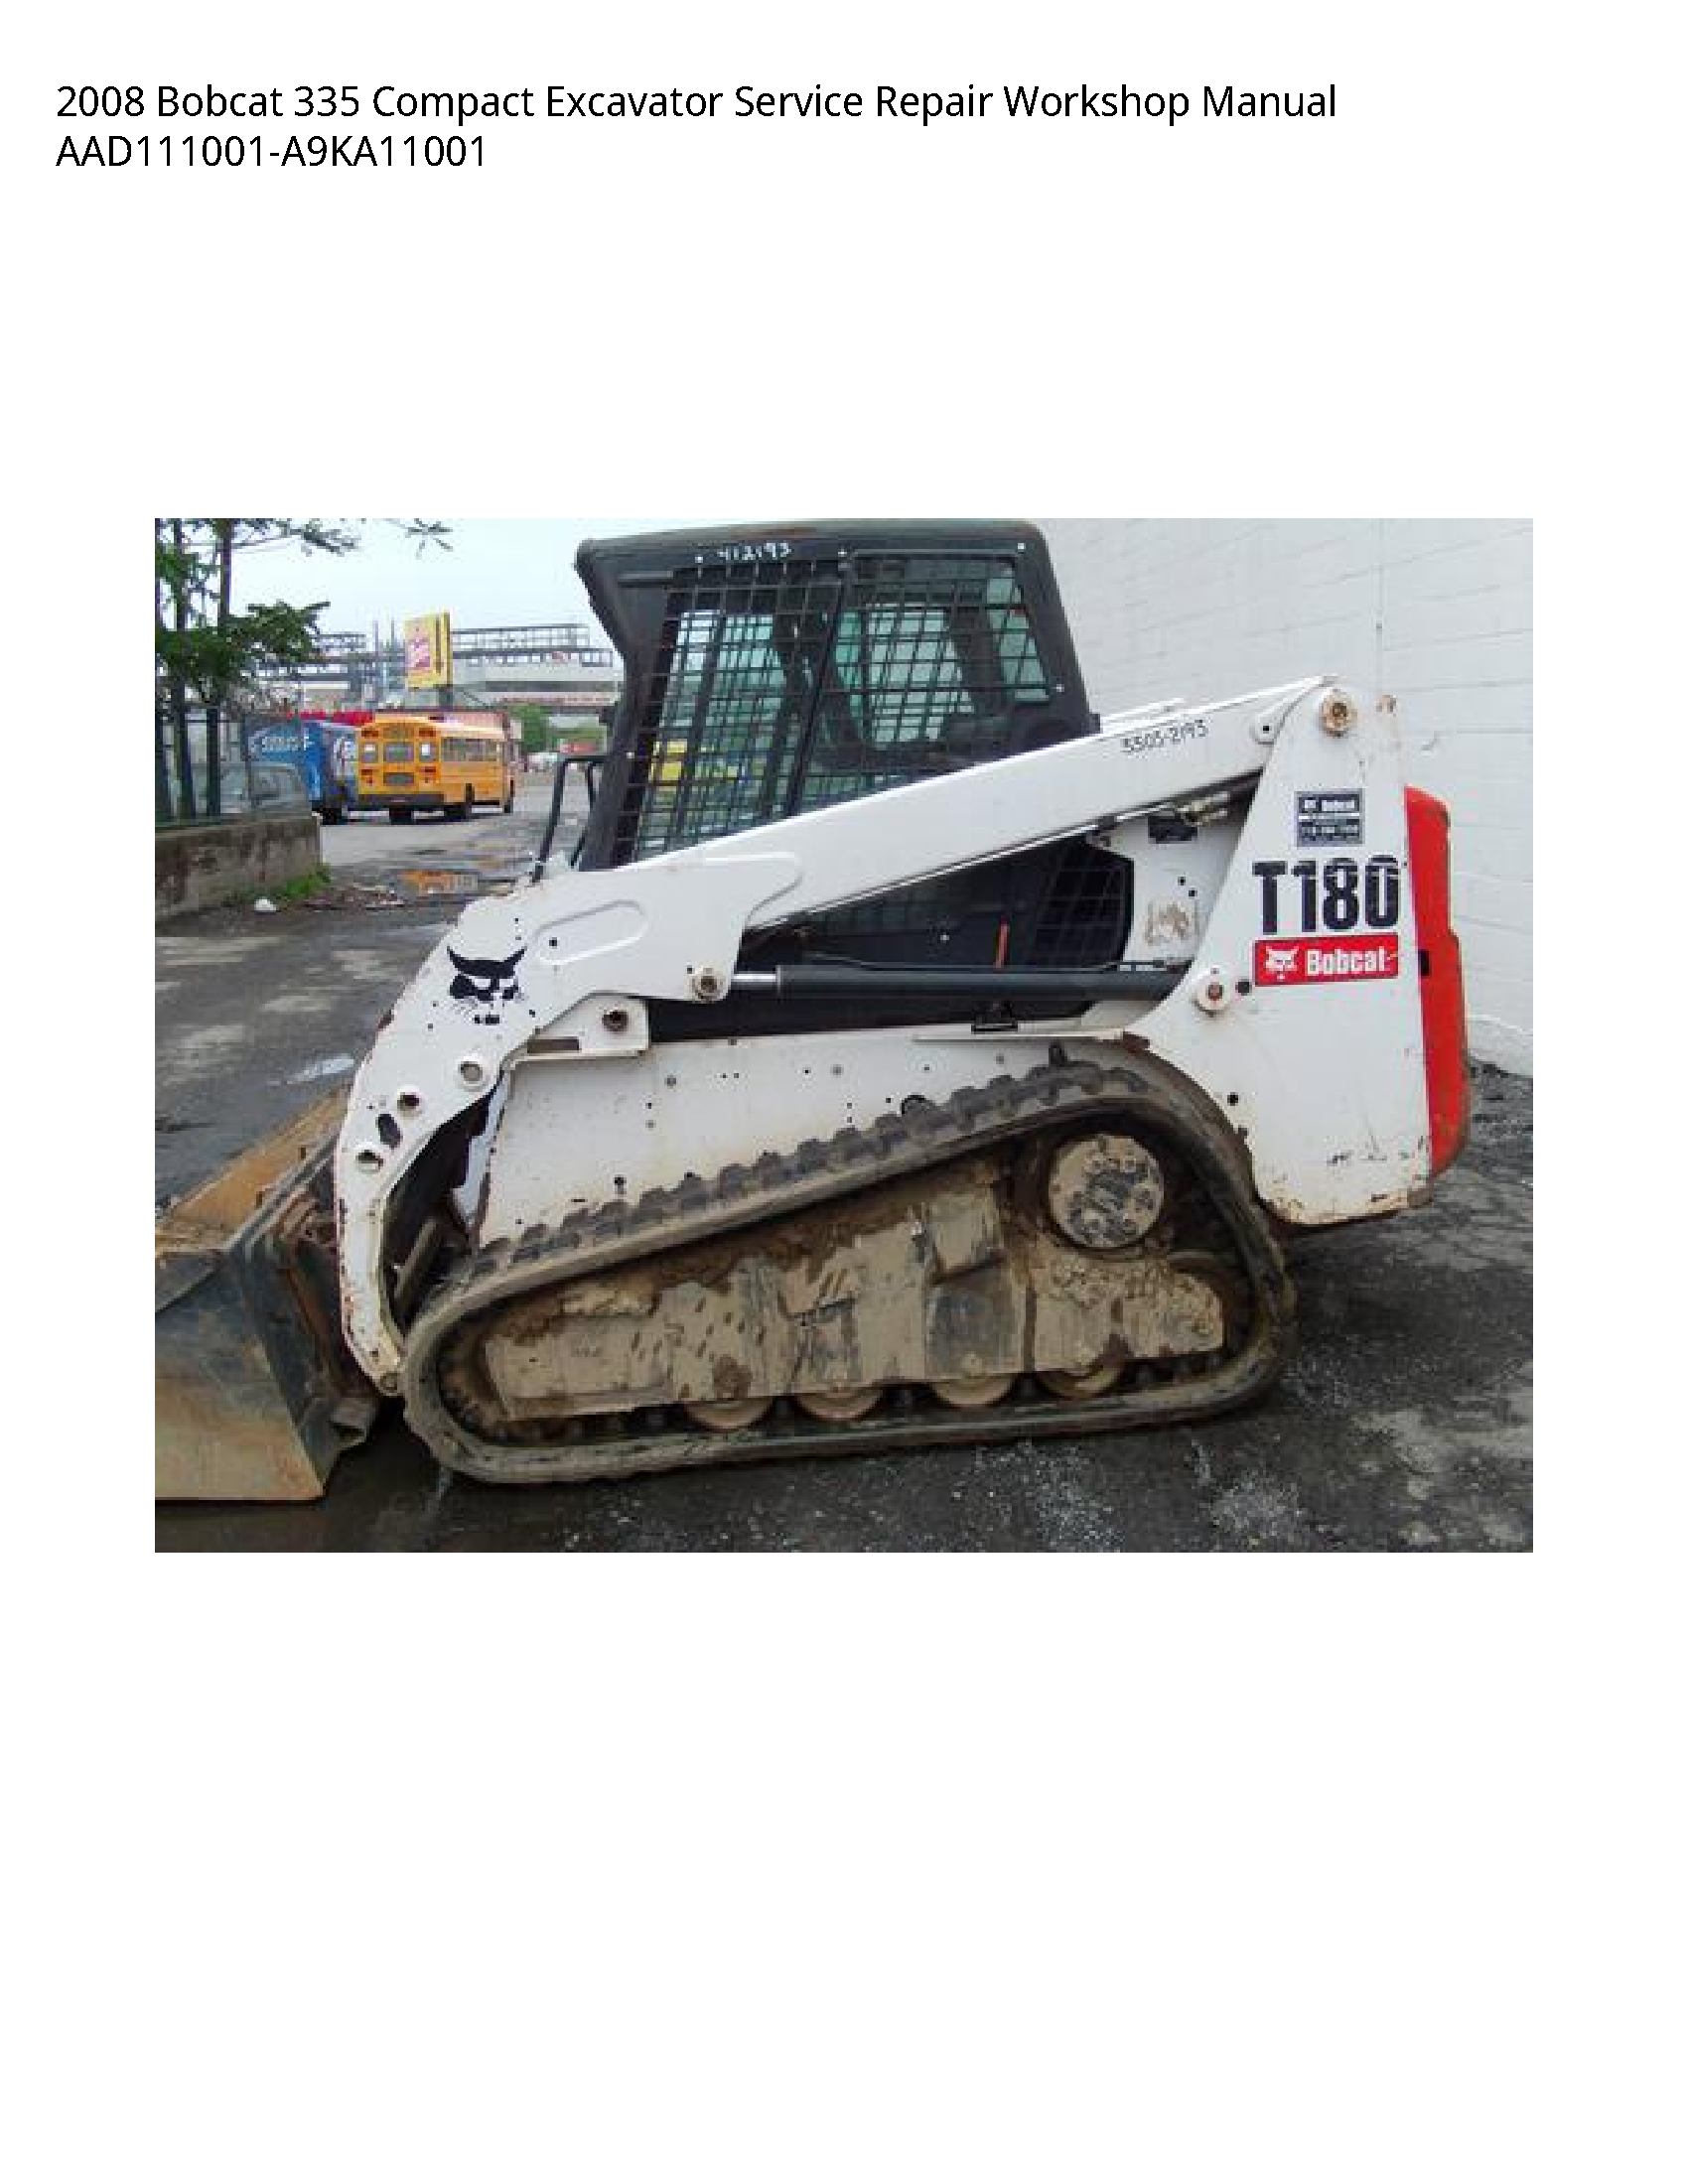 2008 Bobcat 335 Compact Excavator Service Repair Workshop Manual AAD111001-A9KA11001